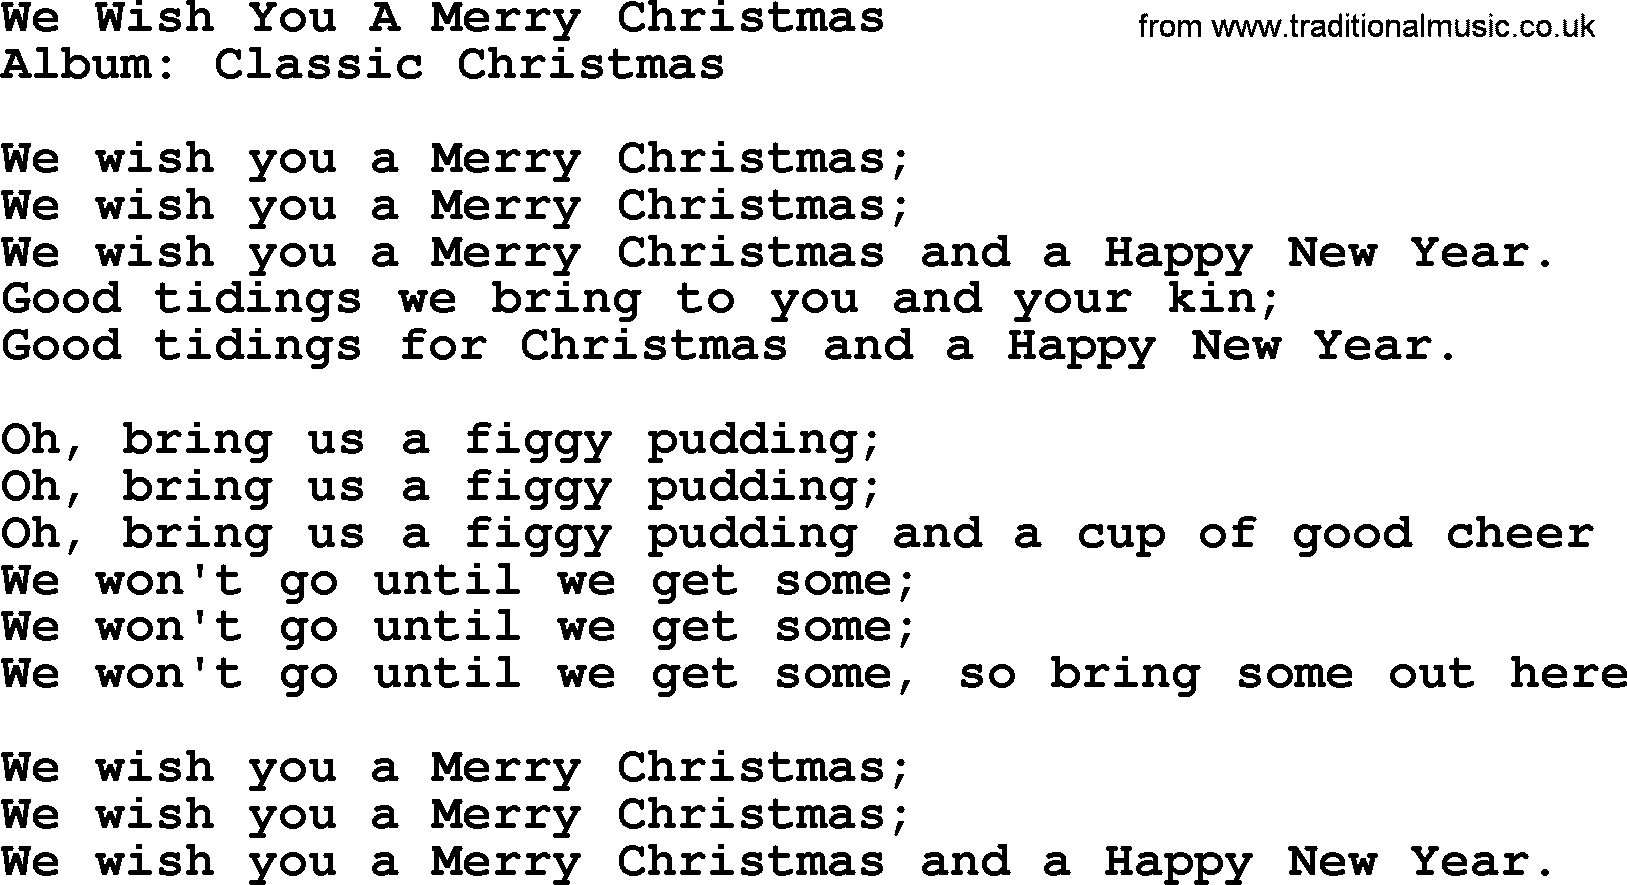 We Wish You A Merry Christmas, by George Strait - lyrics